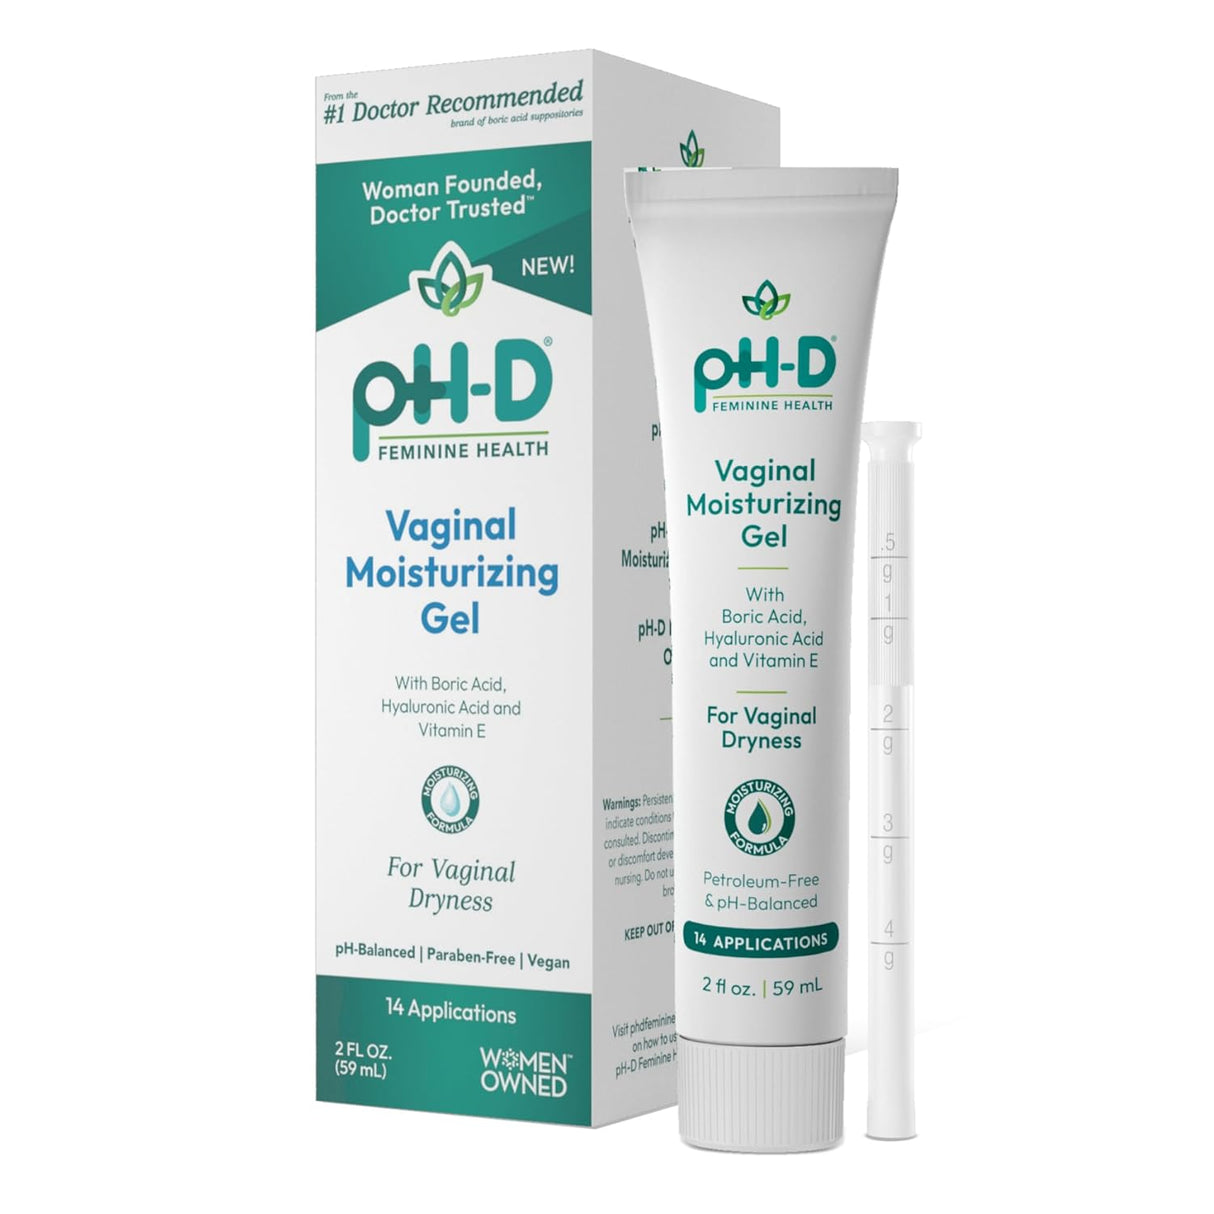 pH-D Feminine Health Boric Acid Moisturizing Vaginal Gel 14 Aplicaciones